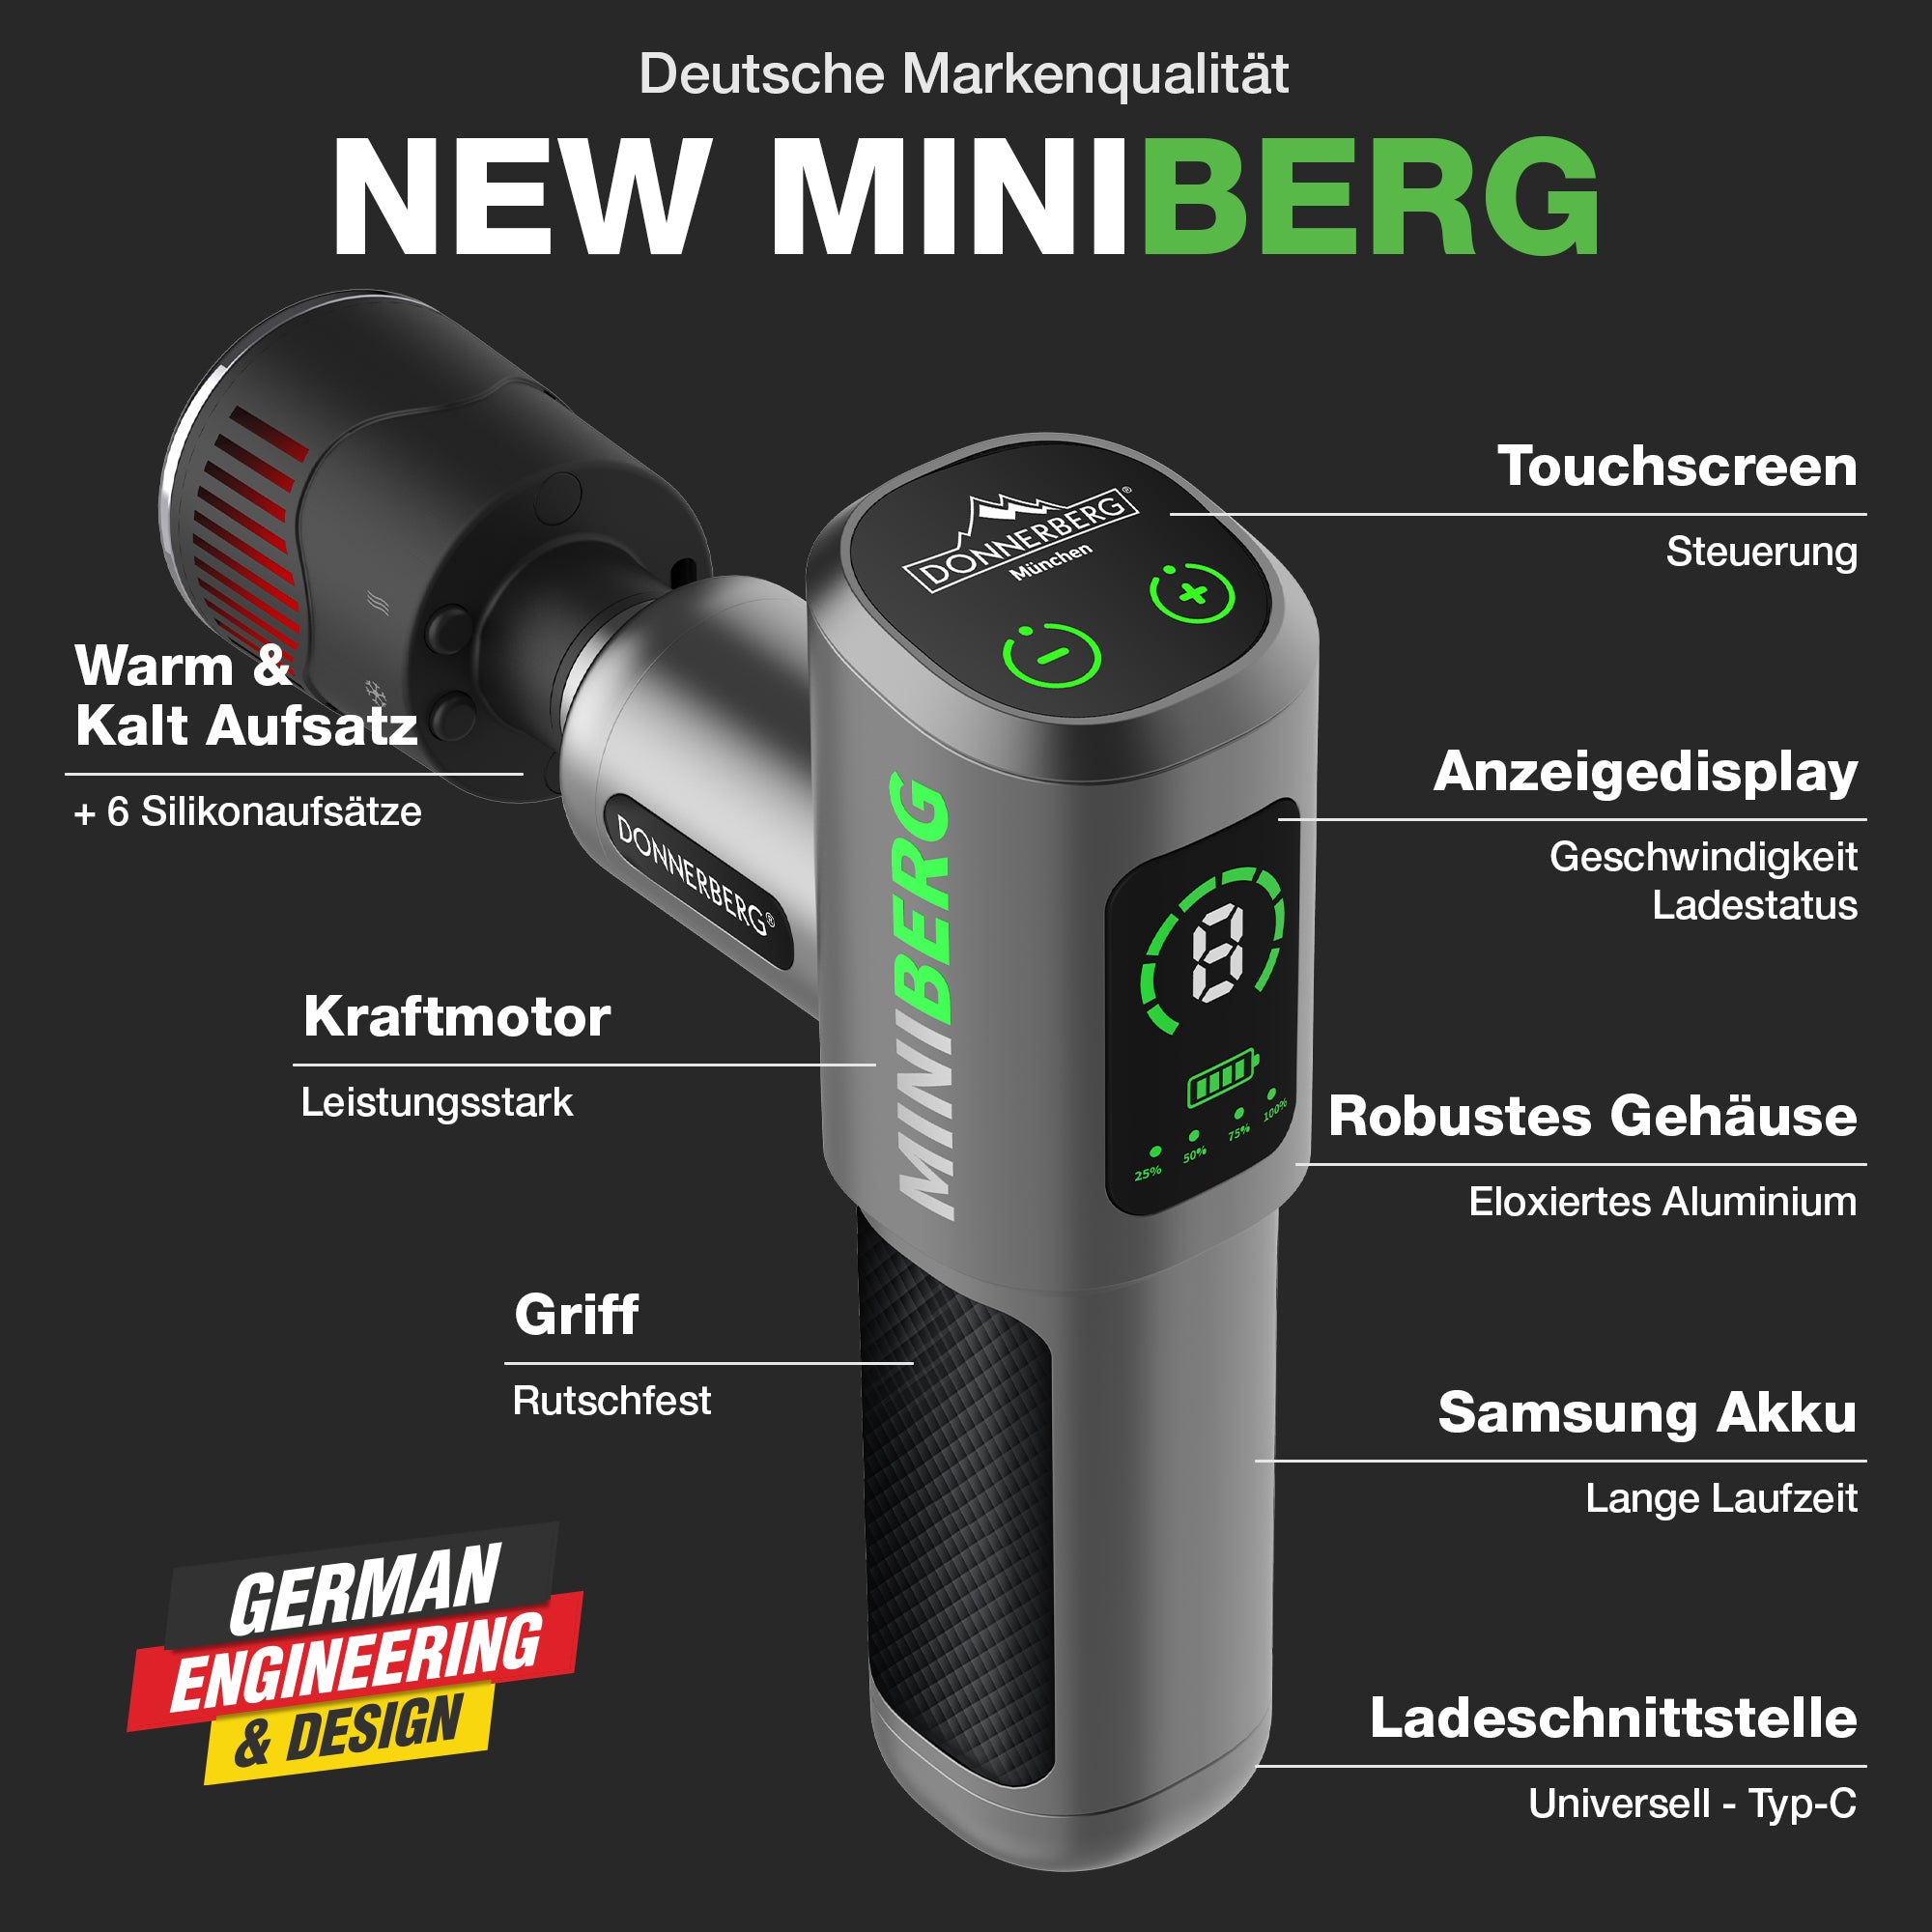 Key features of massage gun Miniberg